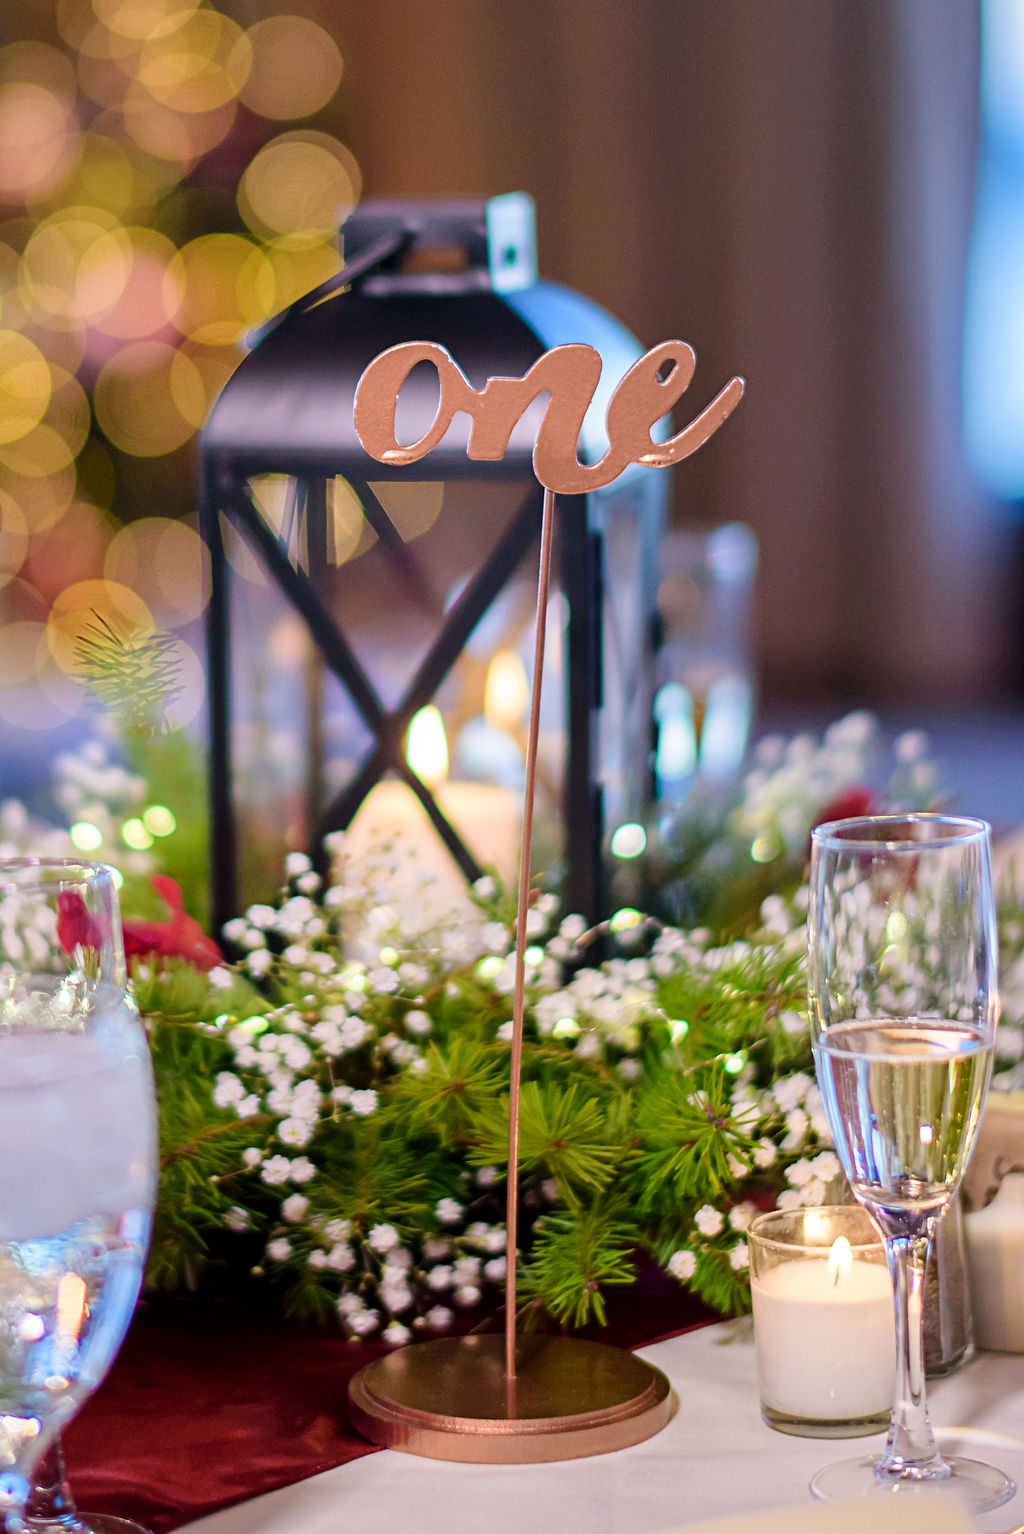 Christmas Inspired Wedding Reception Decor, Black Lantern, Pine Tree Wreath Centerpiece, Gold Table Number